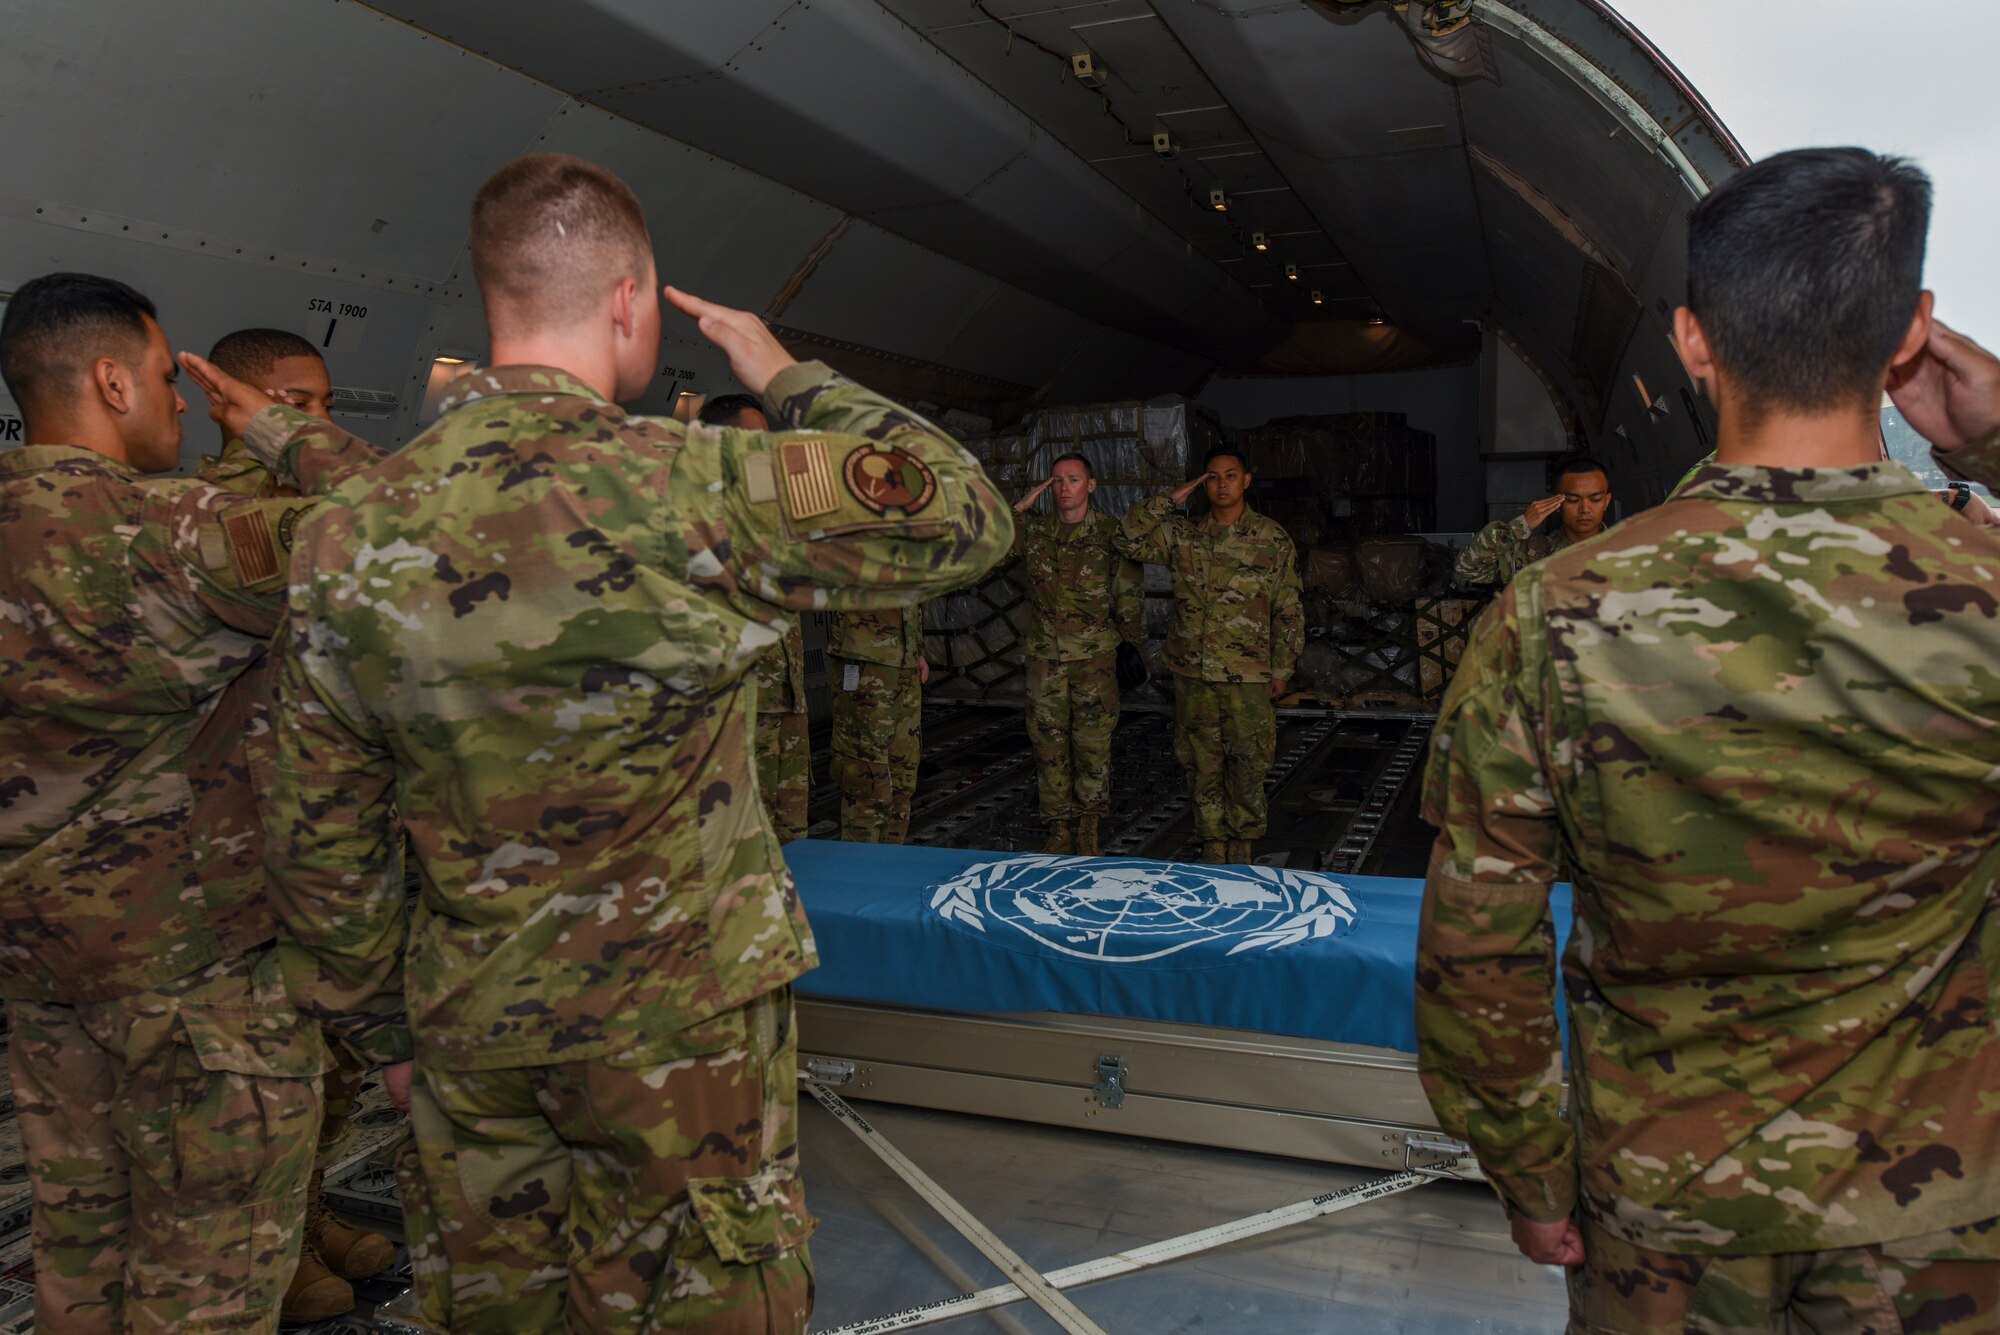 Airmen salute a transfer case during a repatriation